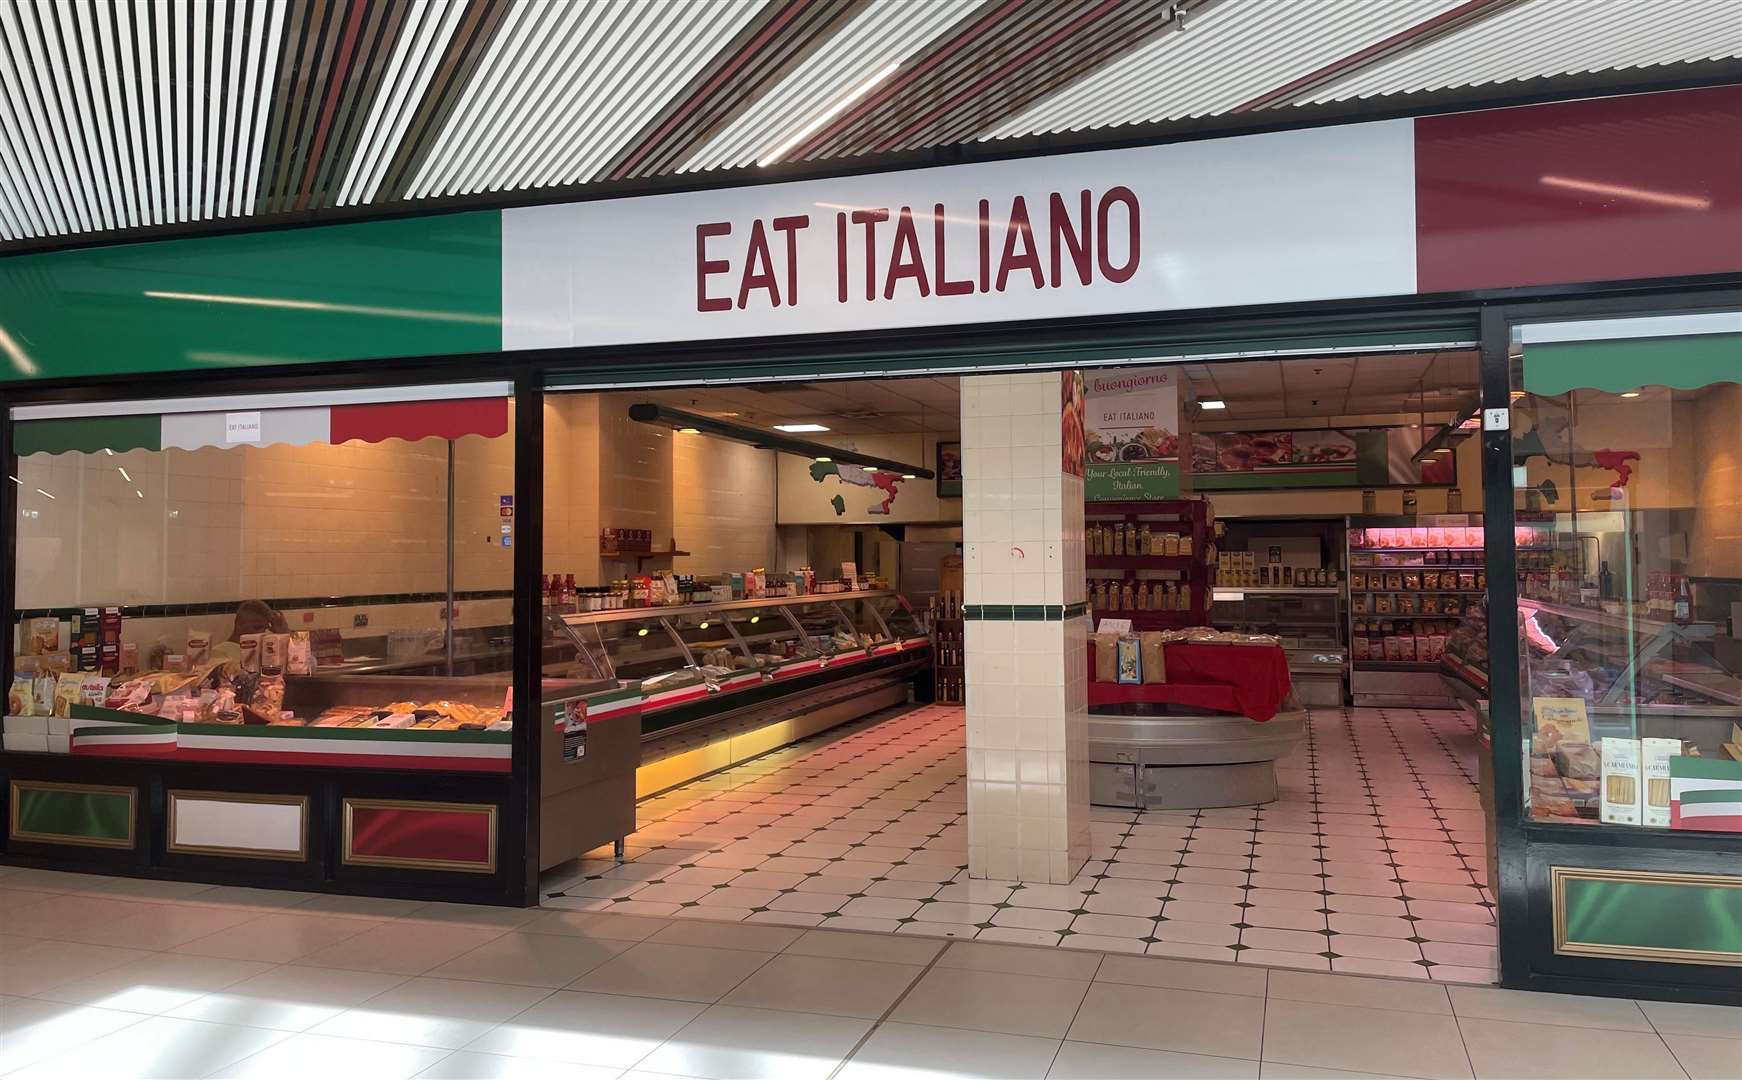 Eat Italiano has opened in The Mall